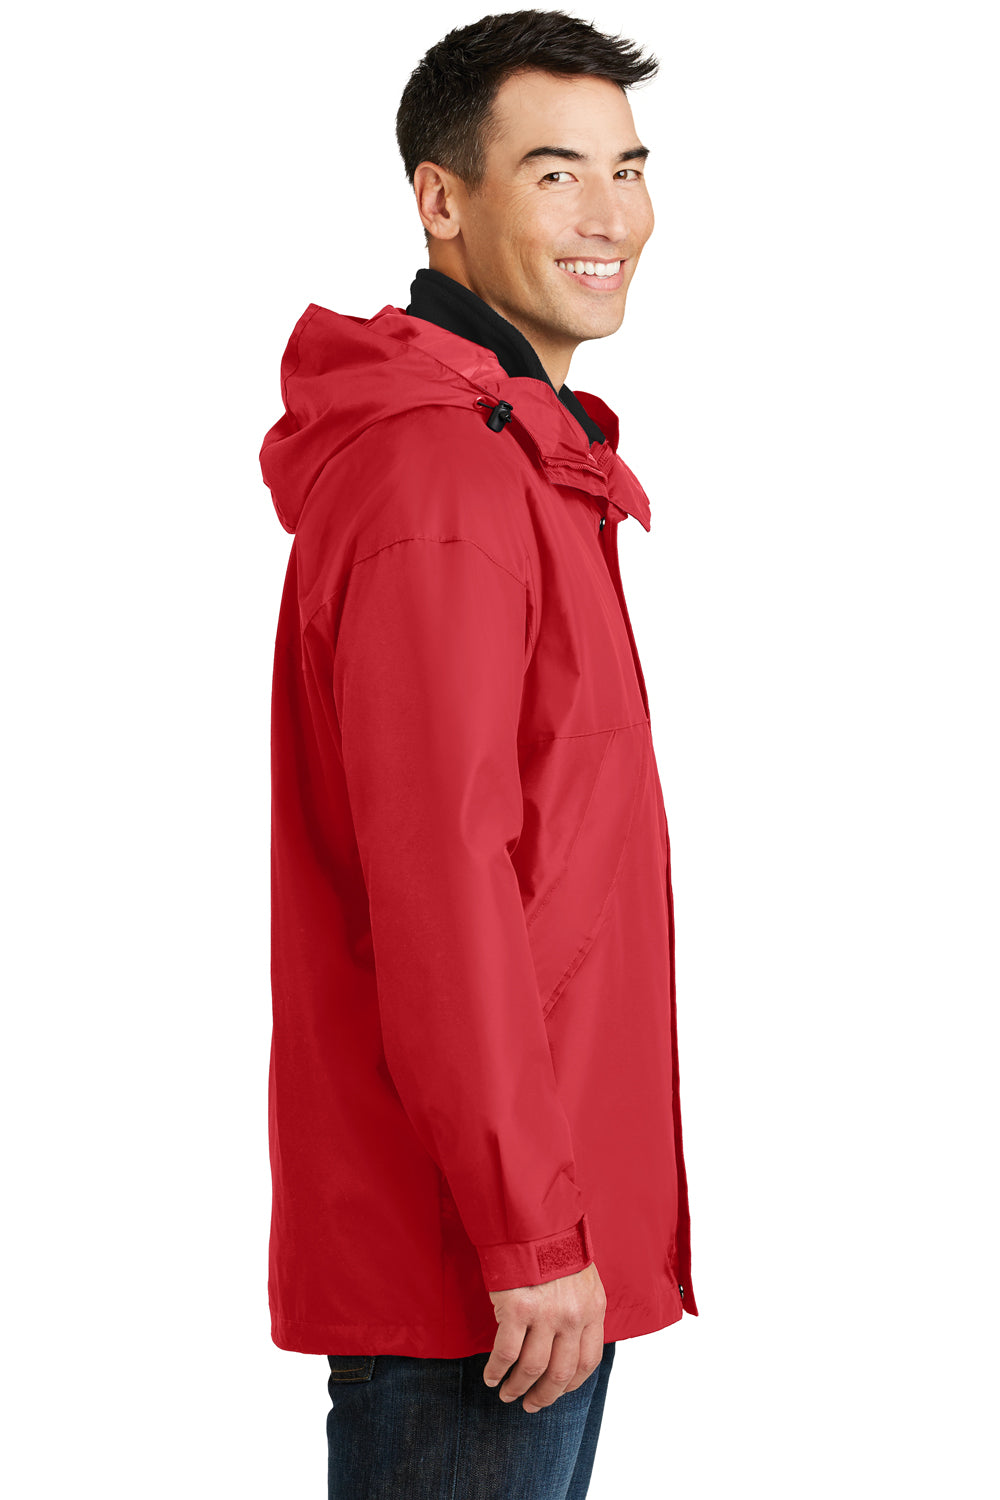 Port Authority J777 Mens 3-in-1 Wind & Water Resistant Full Zip Hooded Jacket Red Side